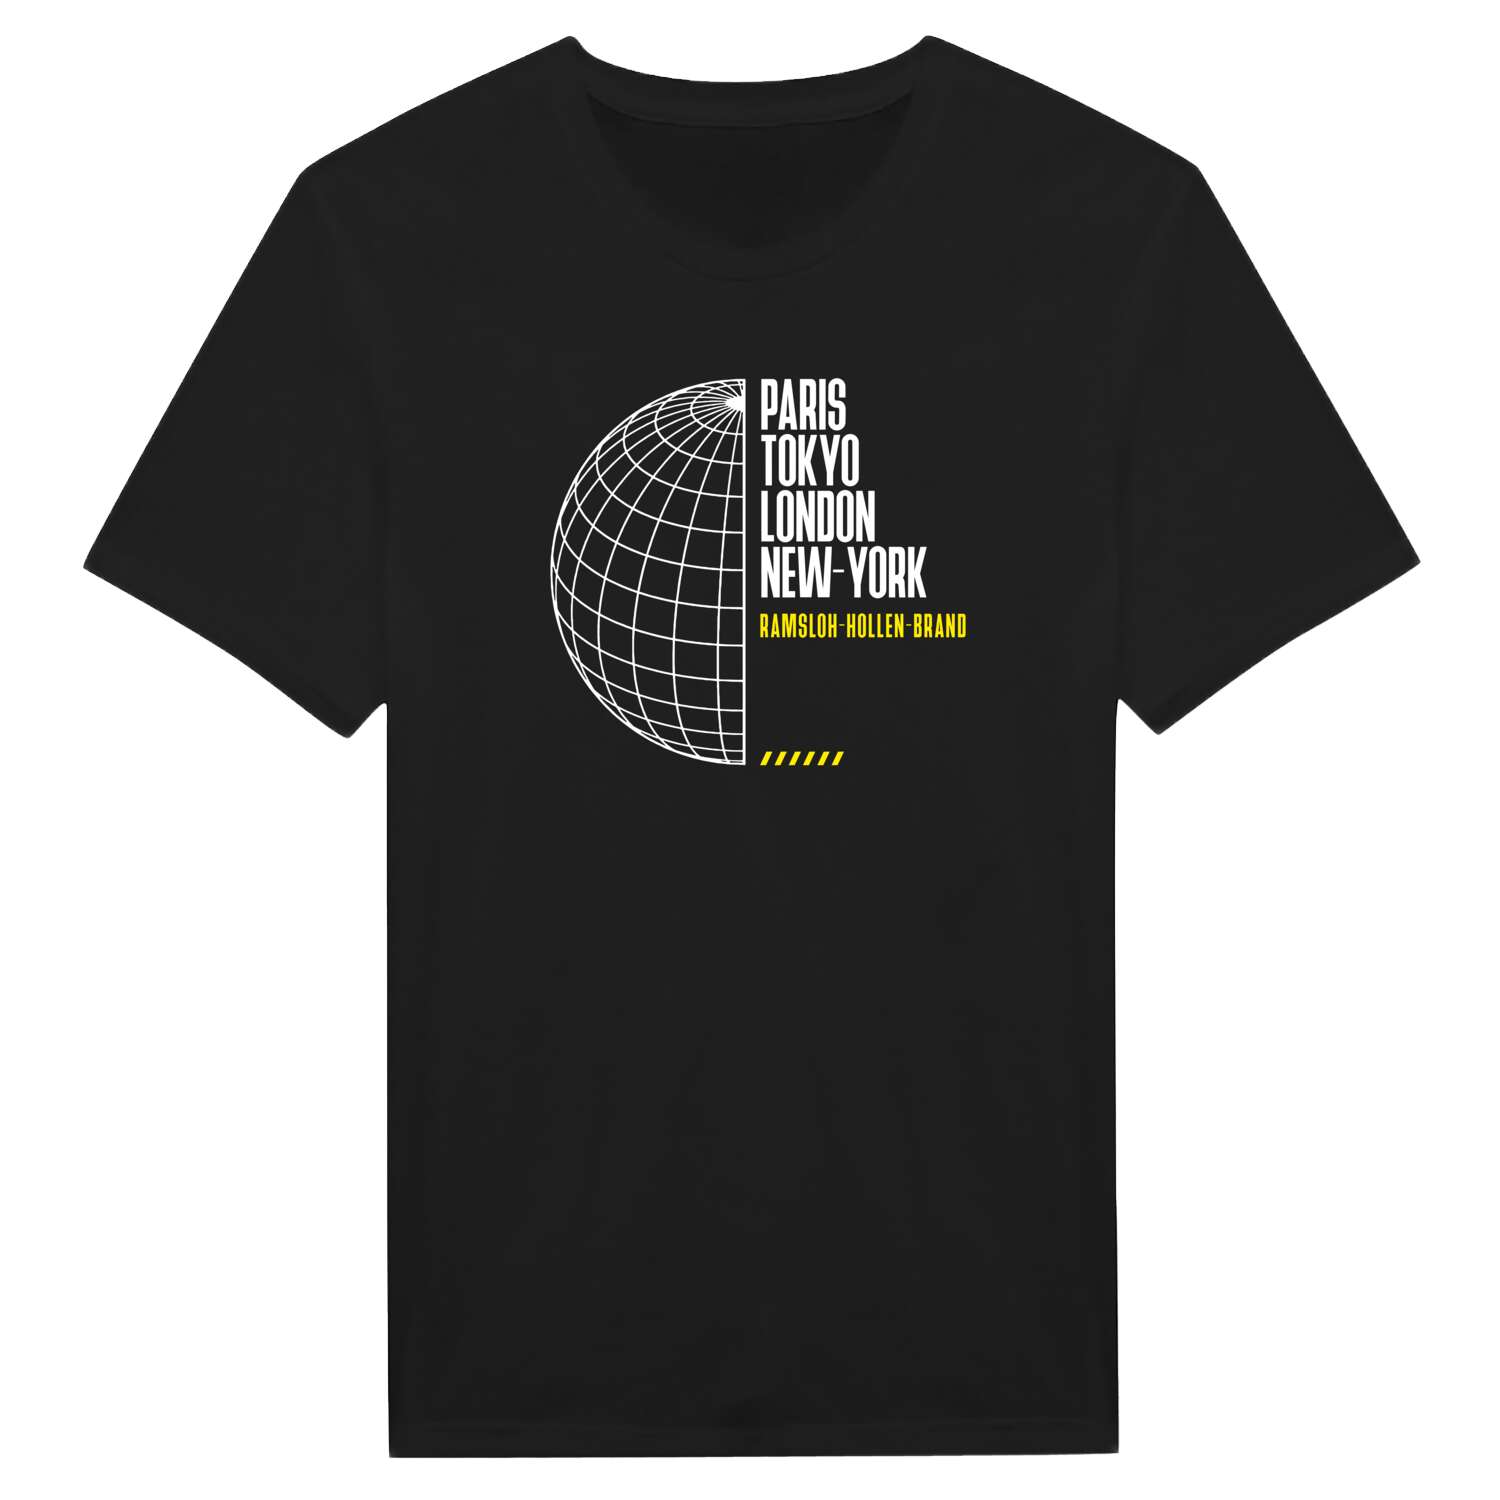 Ramsloh-Hollen-Brand T-Shirt »Paris Tokyo London«